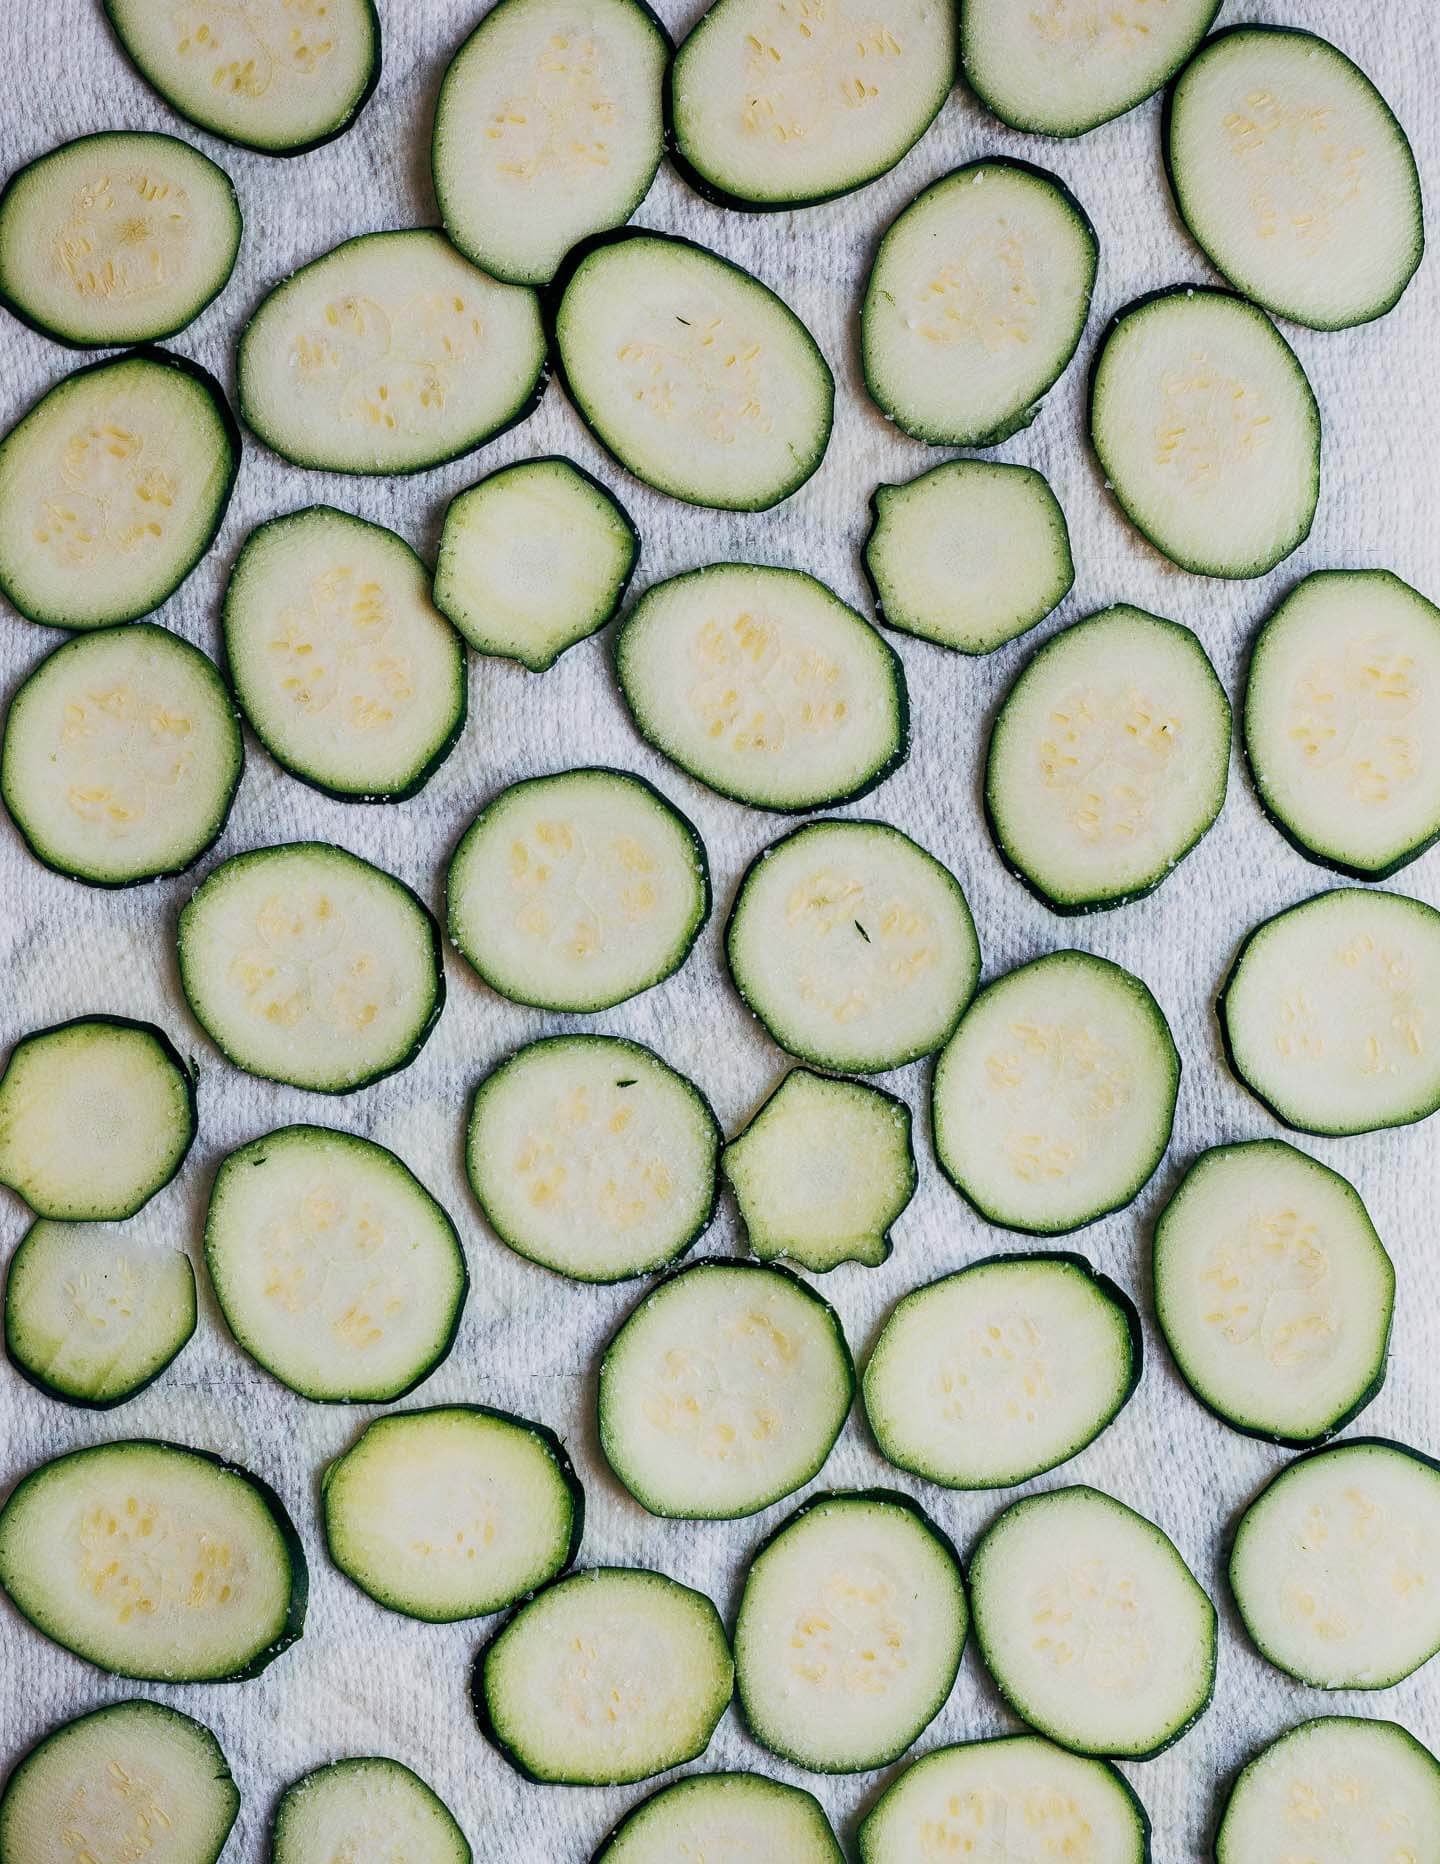 Sliced zucchini